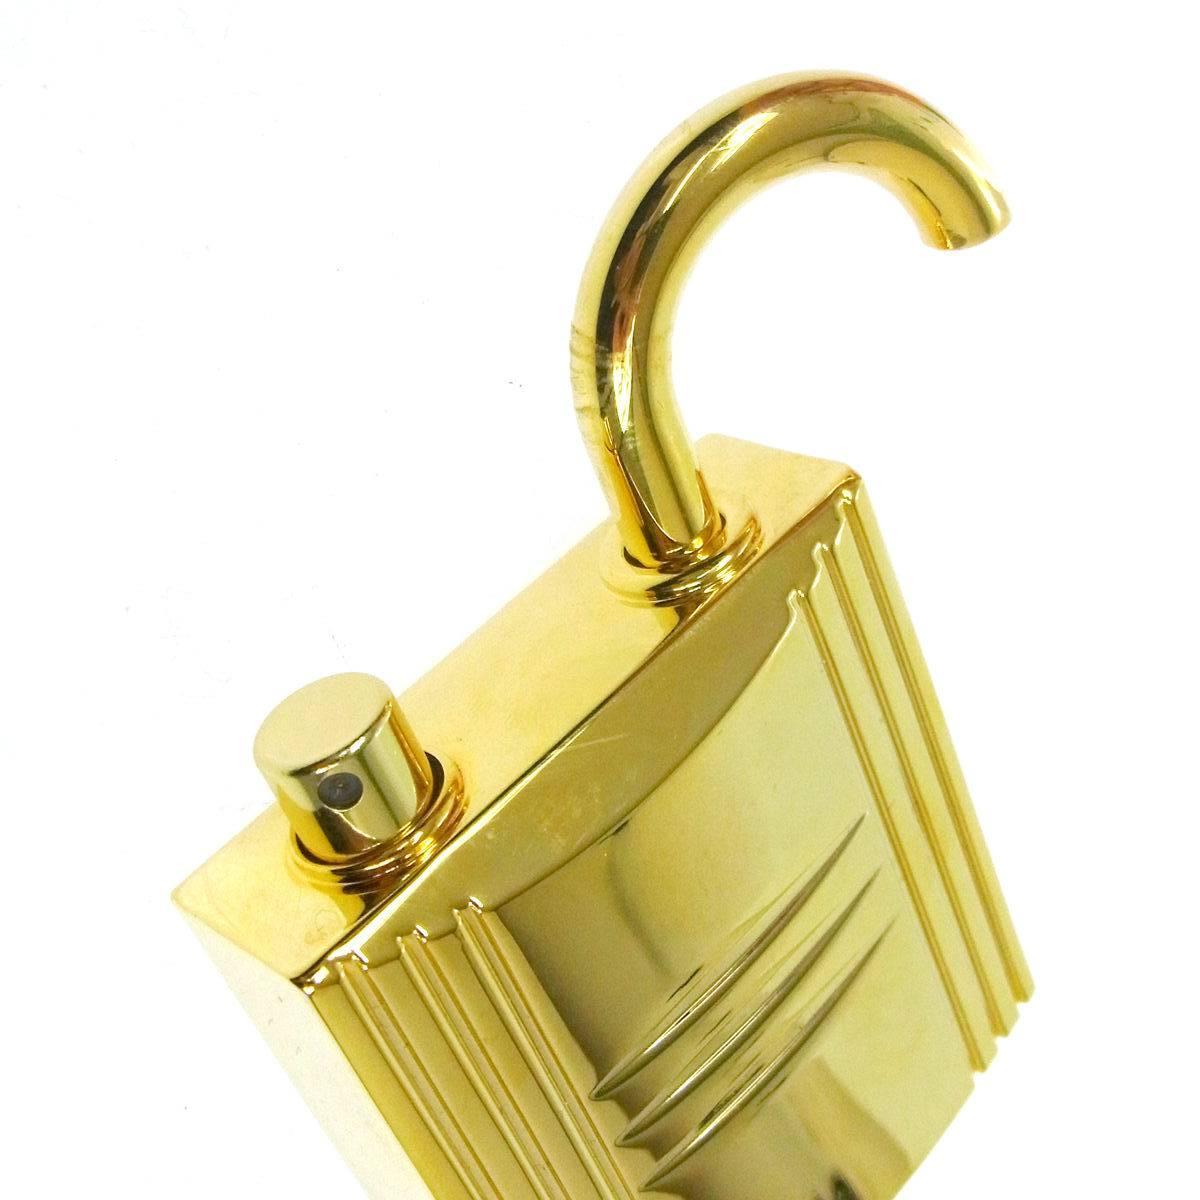 Hermes Cadena Lock Men's Women's Travel Storage Scent Atomizer In Box

Metal
Gold tone
Measures 2